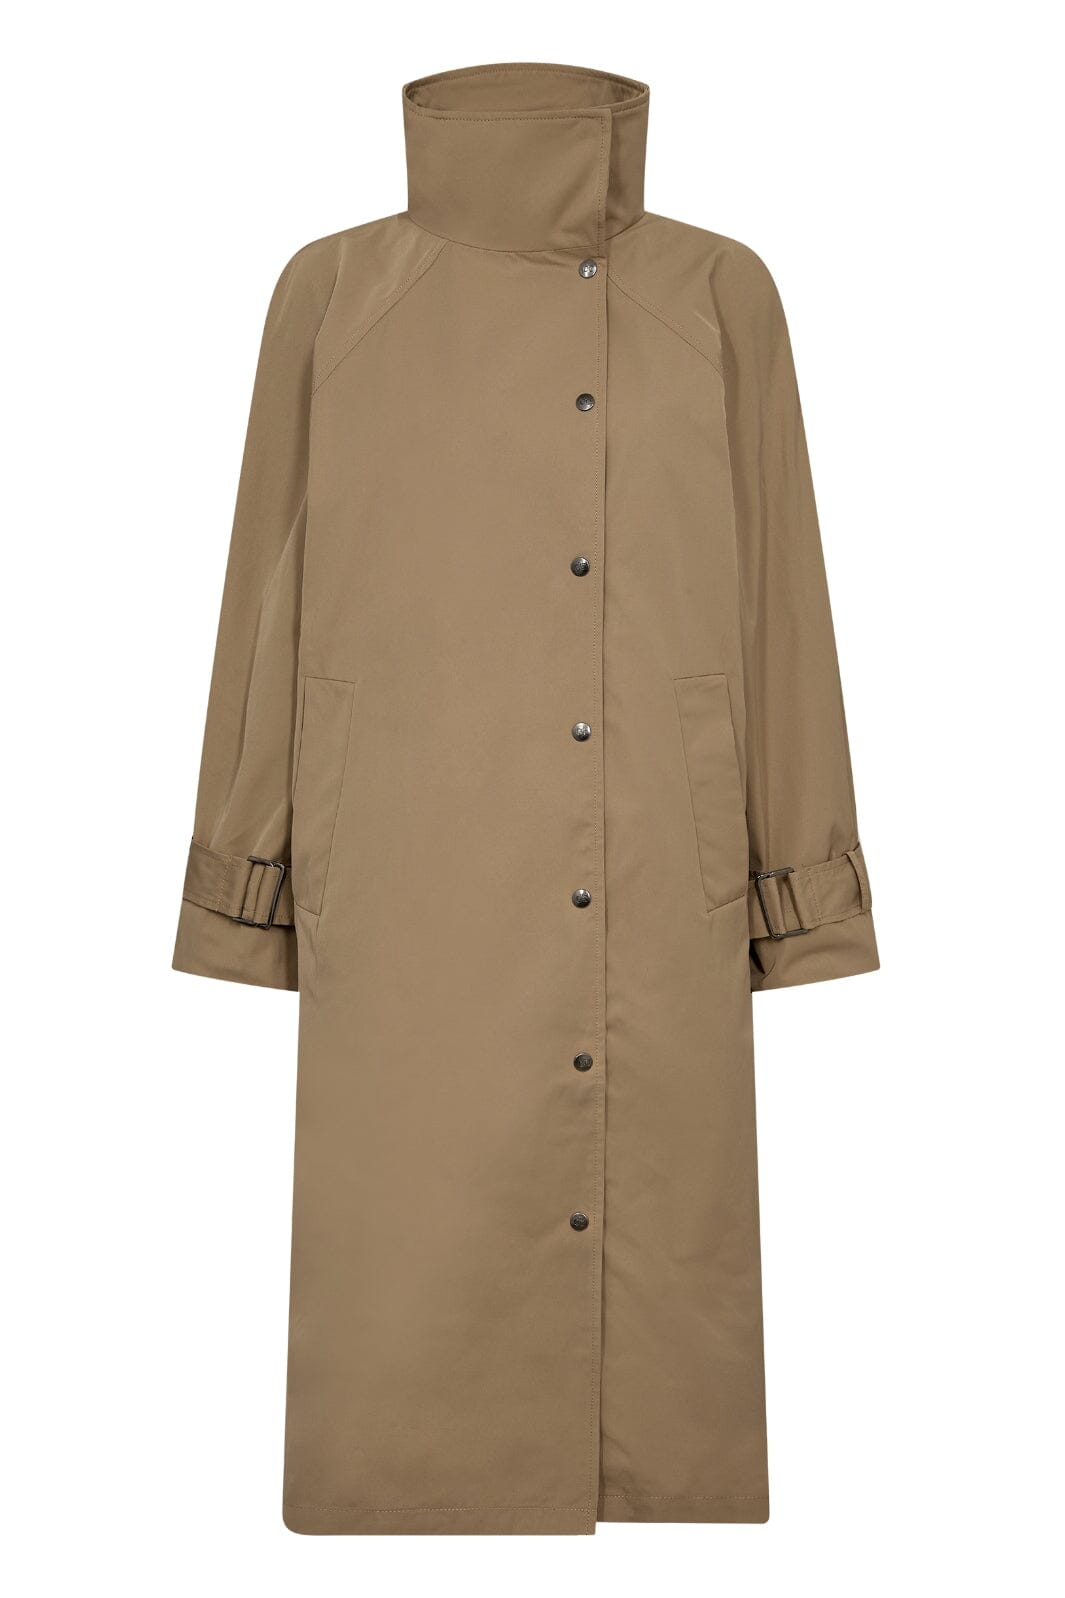 Co´couture - Franciscc Oversize Coat 30157 - 16 Khaki Jakker 